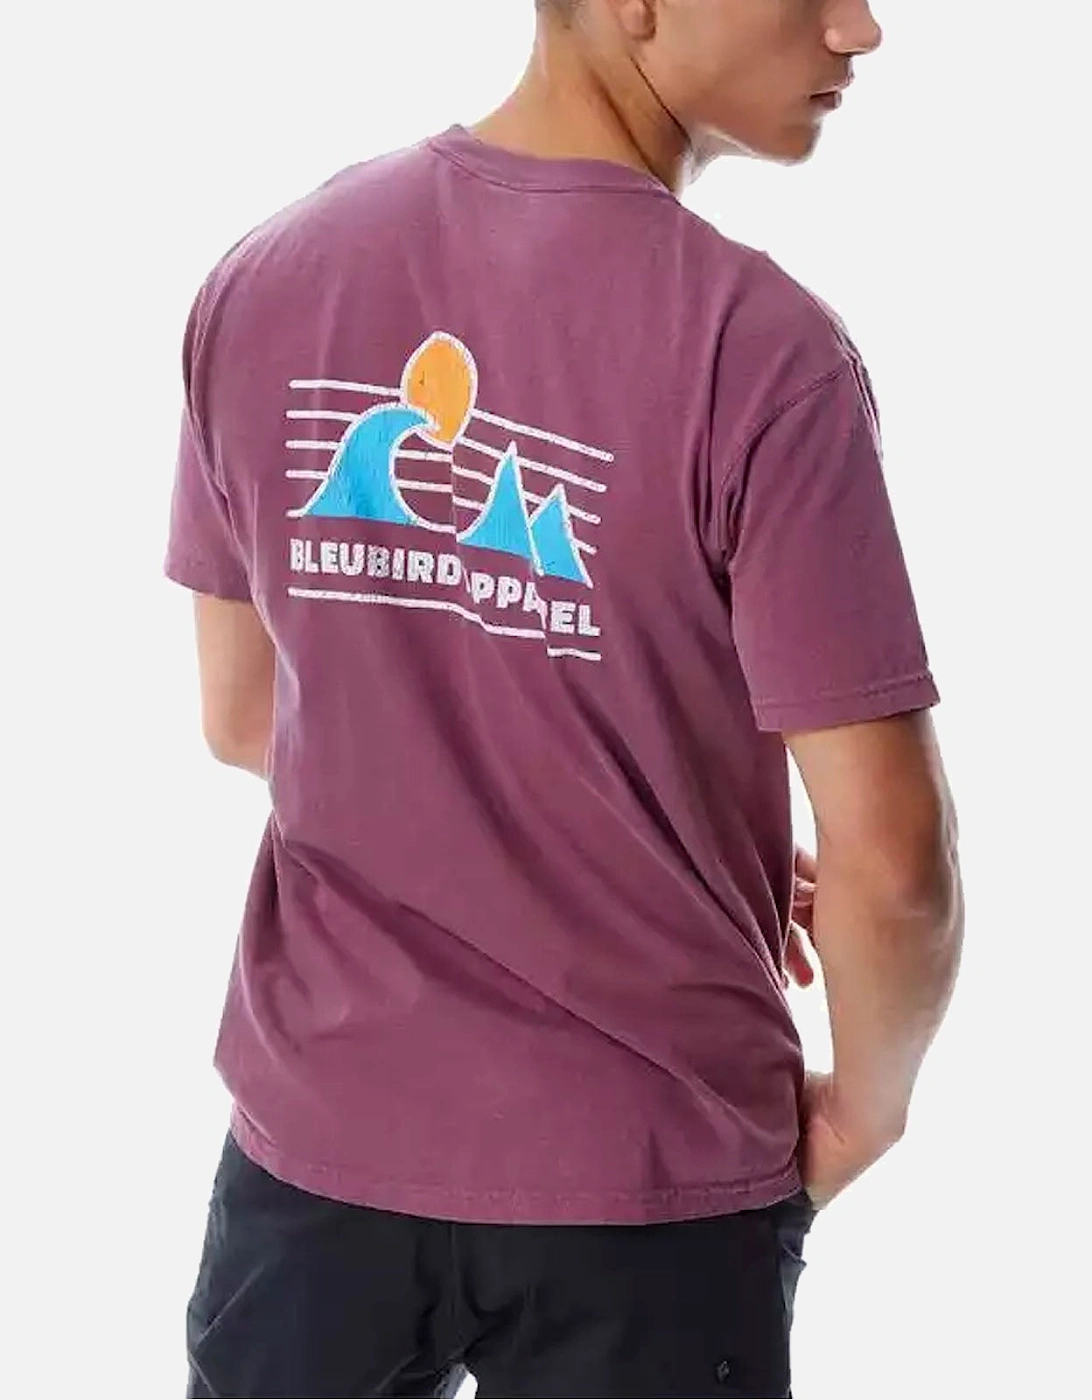 Horizon Crew Neck Short Sleeve T-Shirt